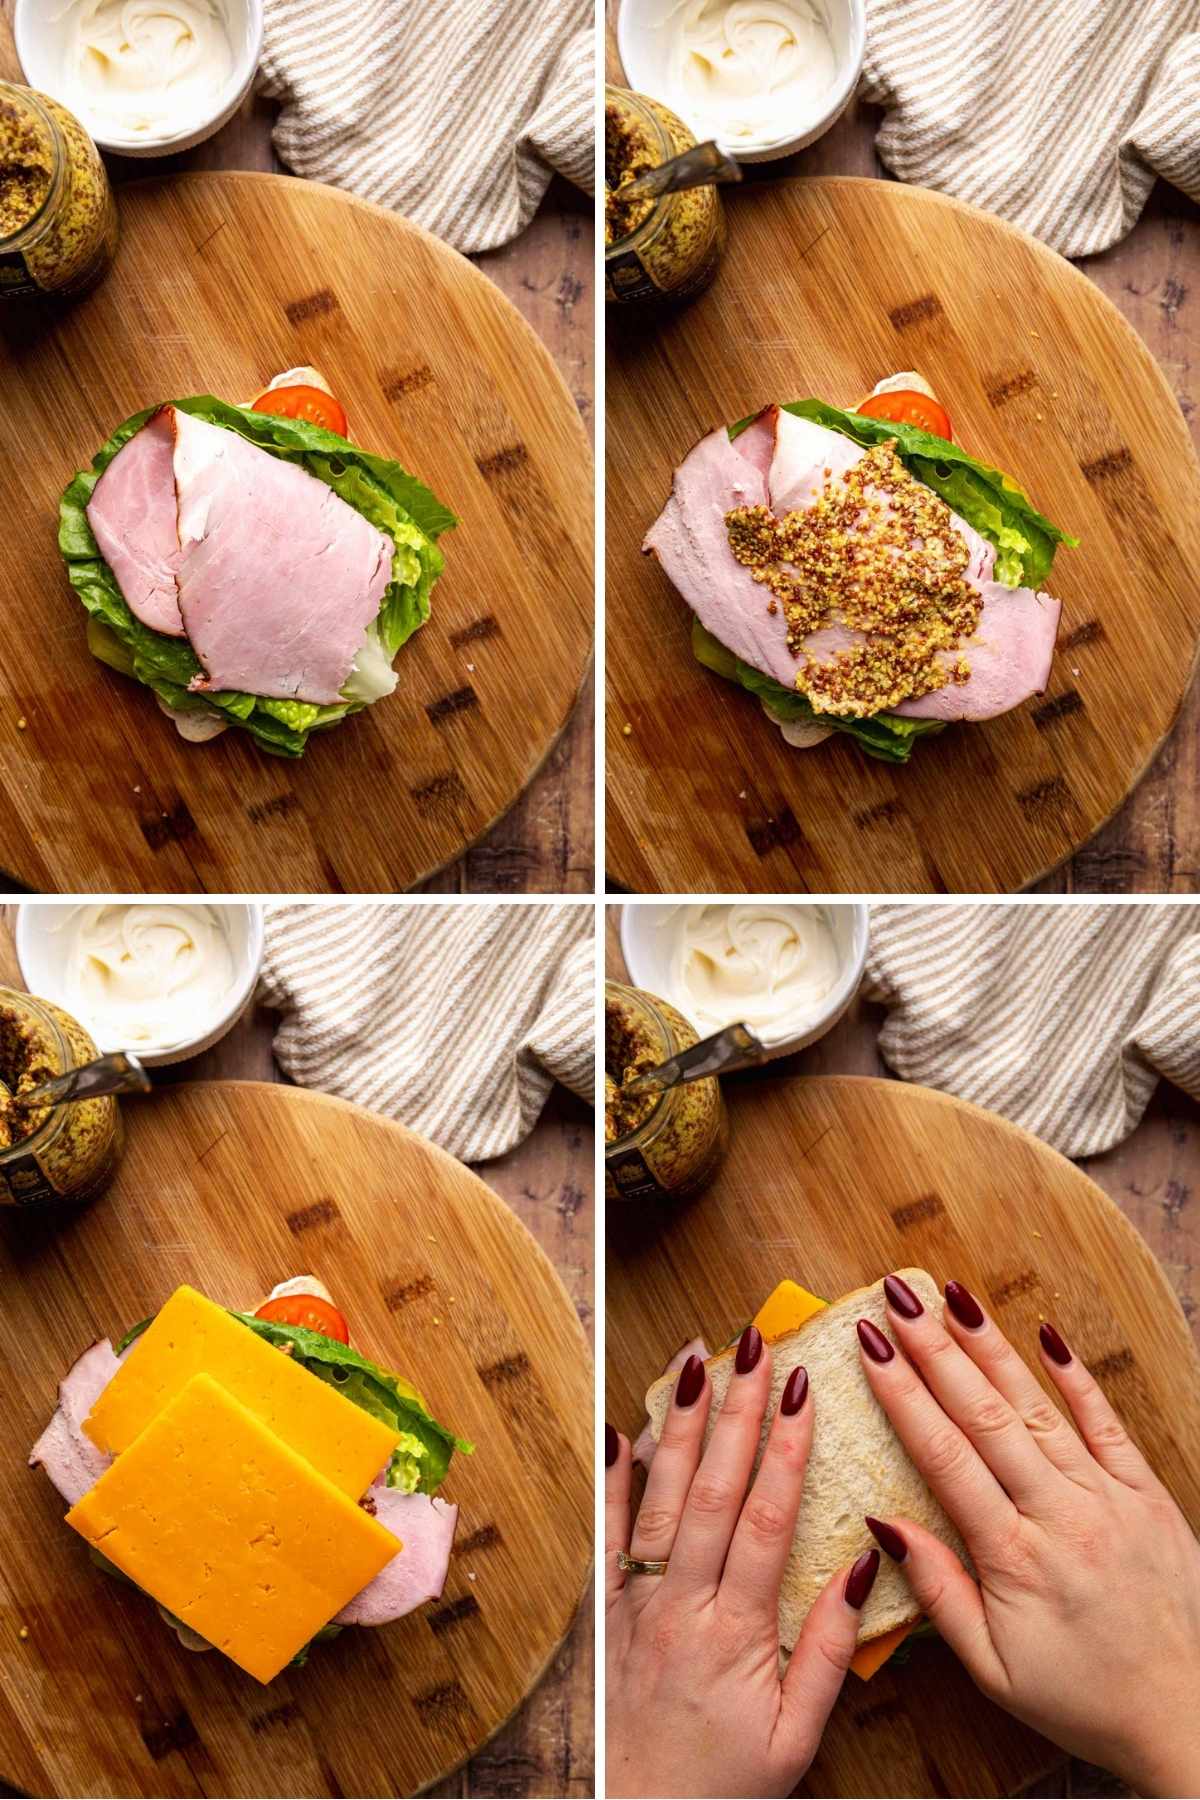 Ultimate Ham Sandwich collage